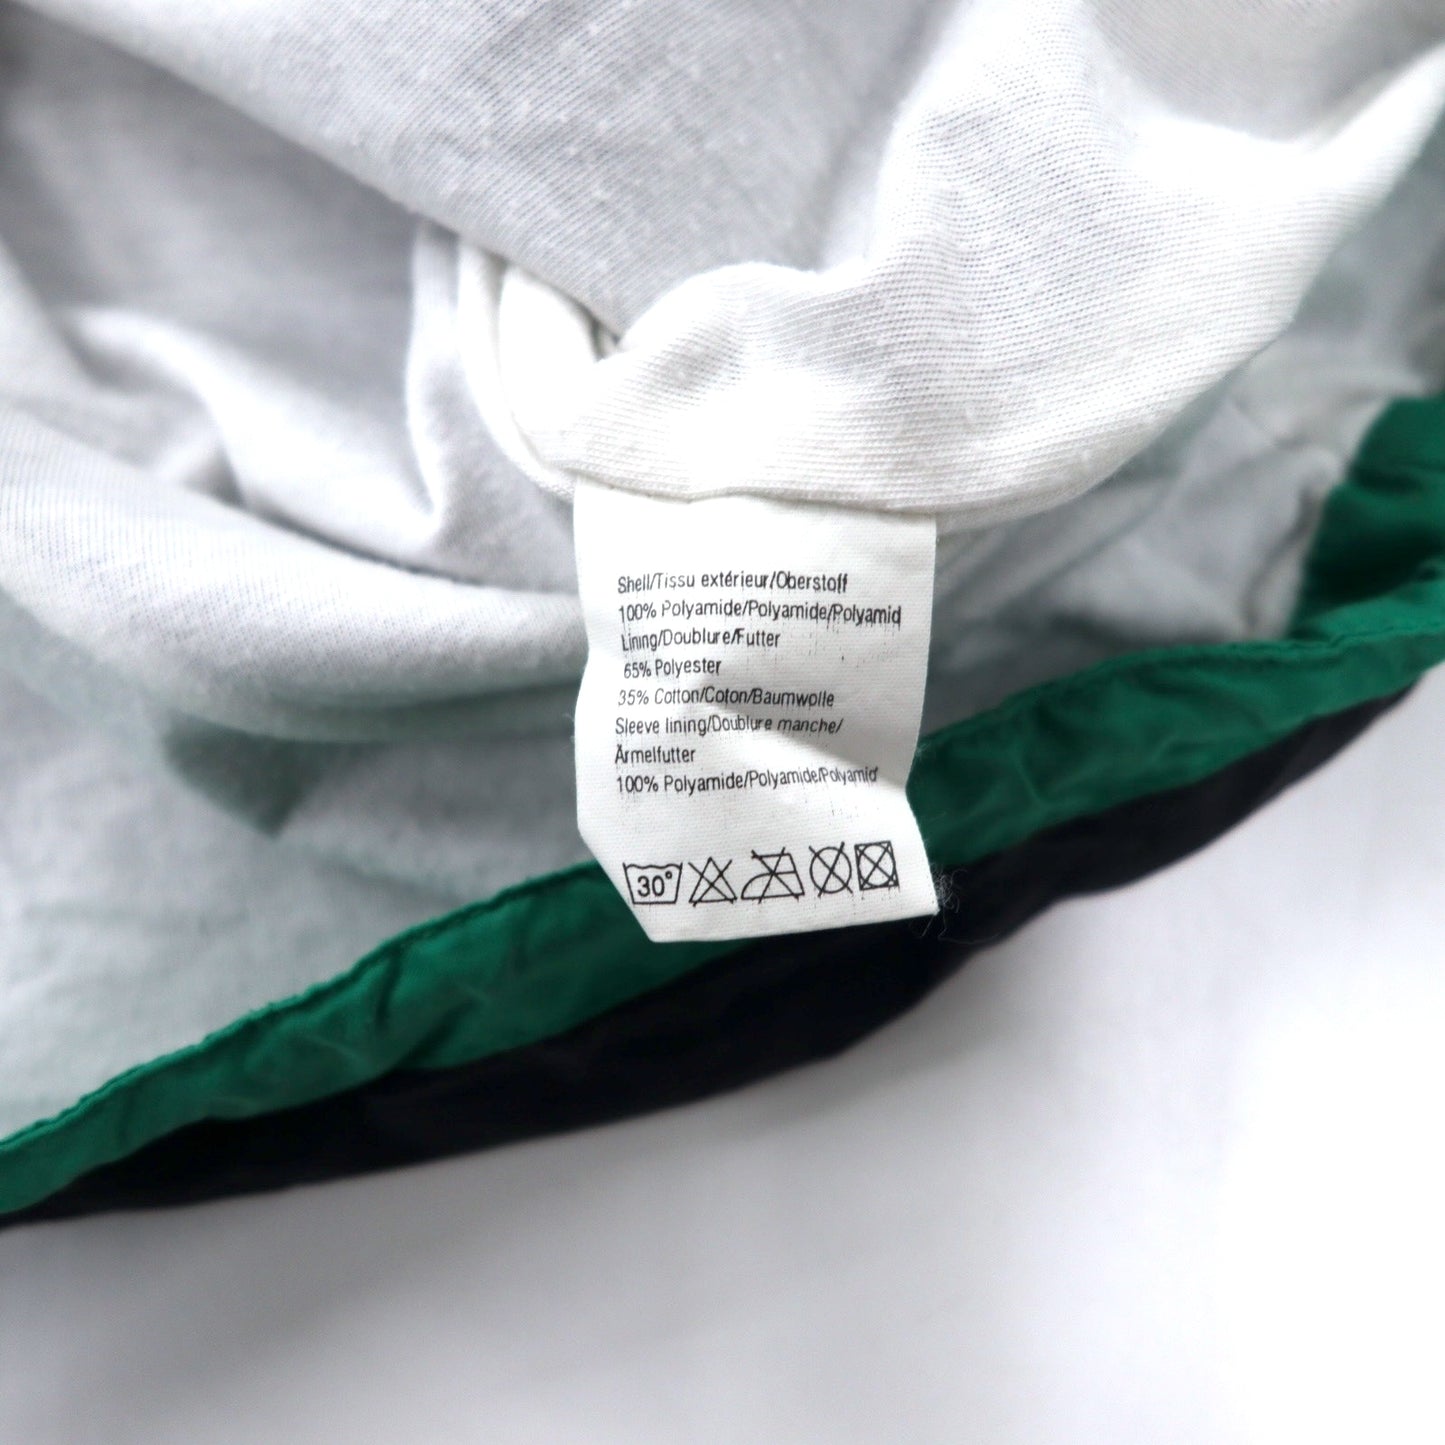 PUMA 90年代 ナイロンジャケット M ブラック グリーン ポリエステル ワンポイント刺繍 ビッグサイズ